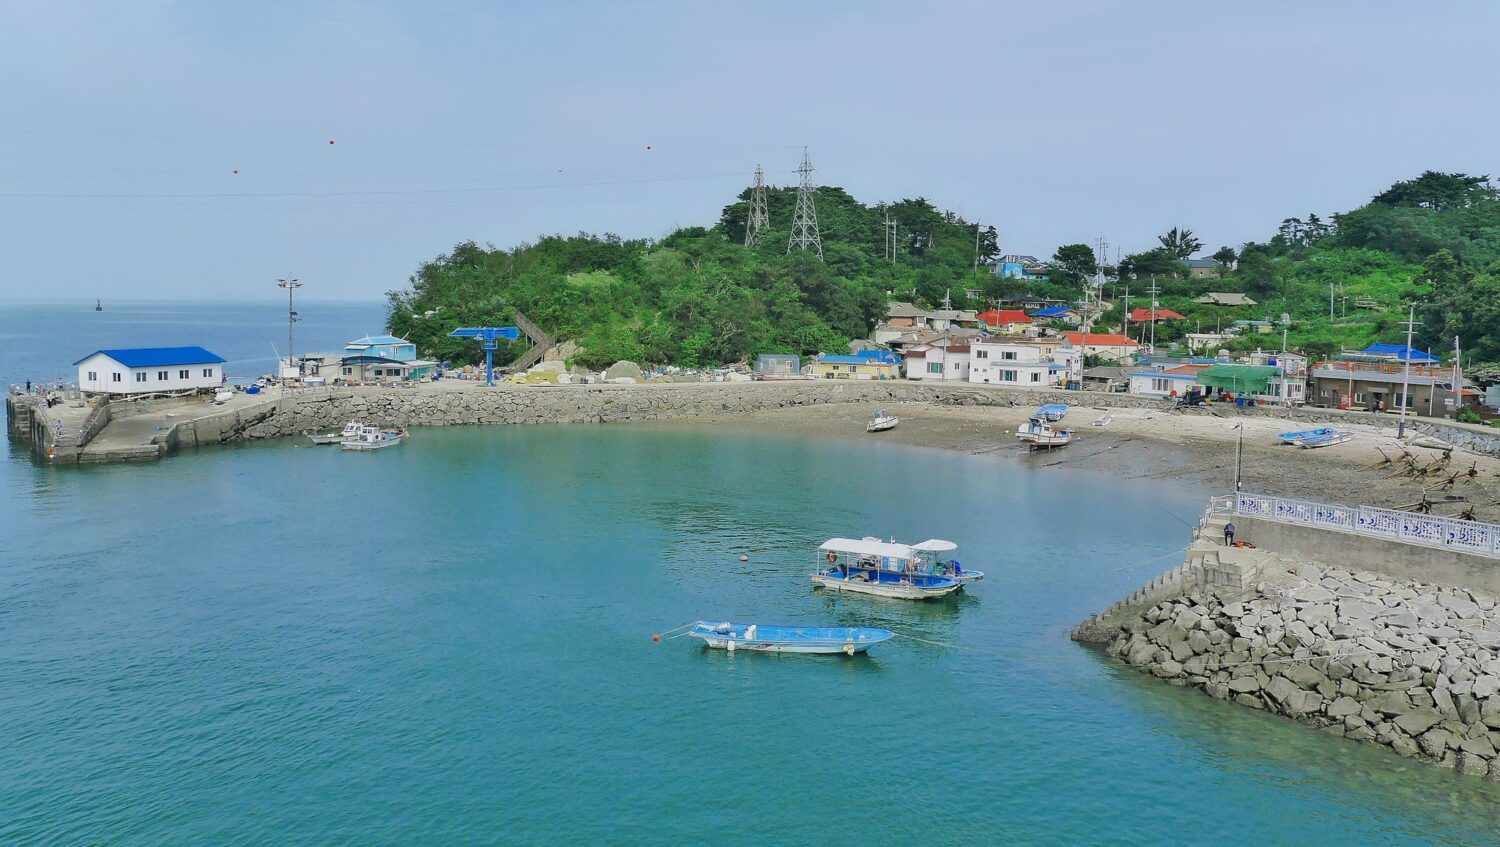 muuido island near seoul